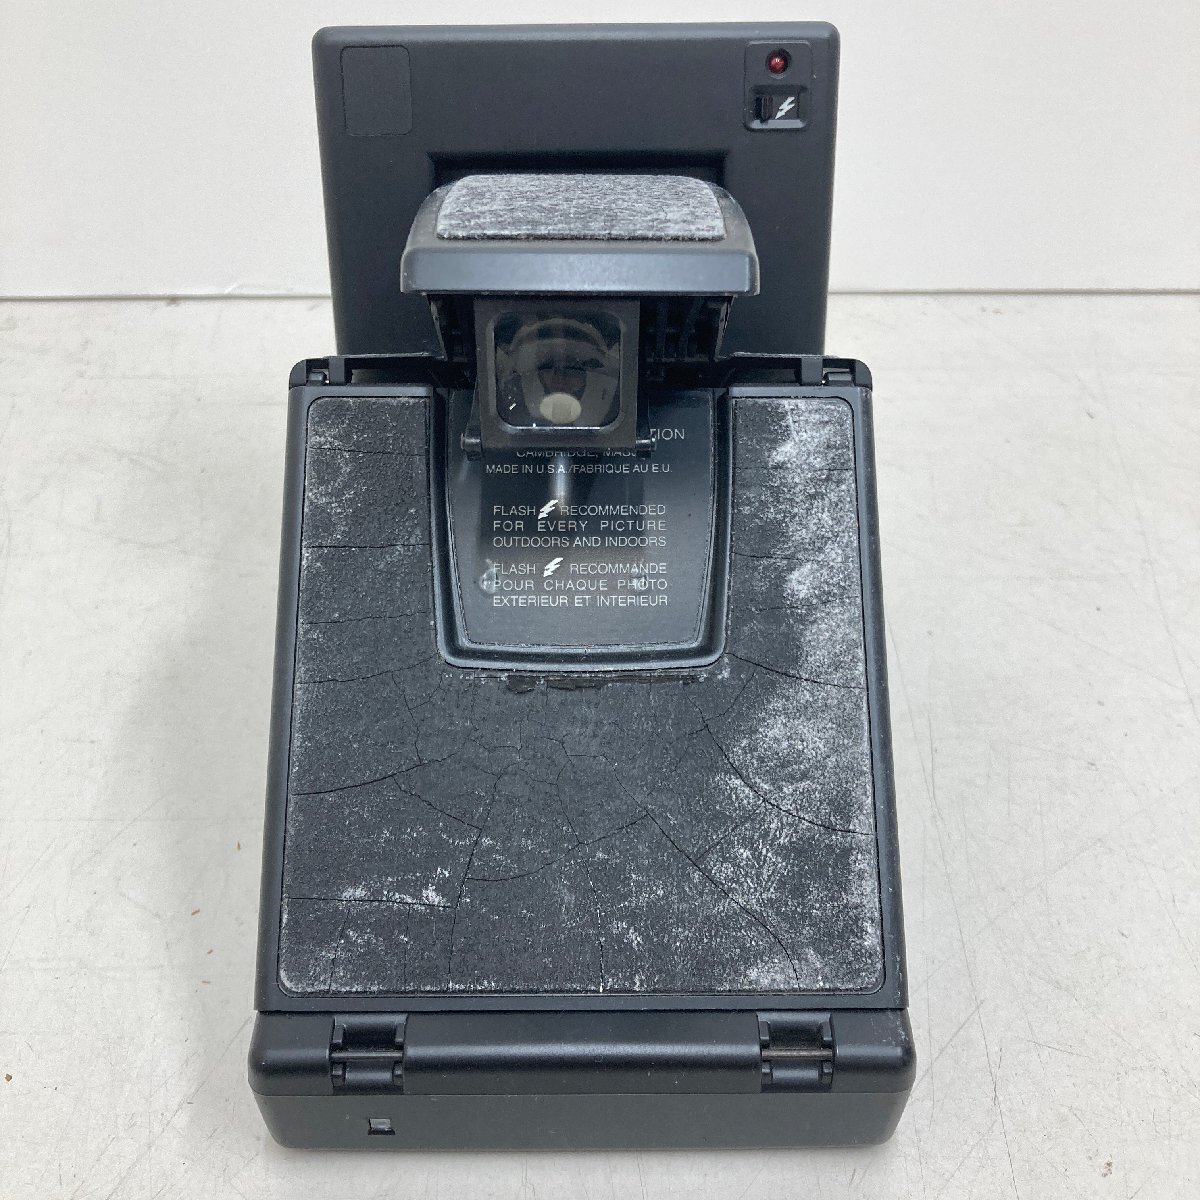 **[21] POLAROID Polaroid camera SLR680 LAND CAMERA operation not yet verification Junk present condition goods manual attaching 06/050121m**